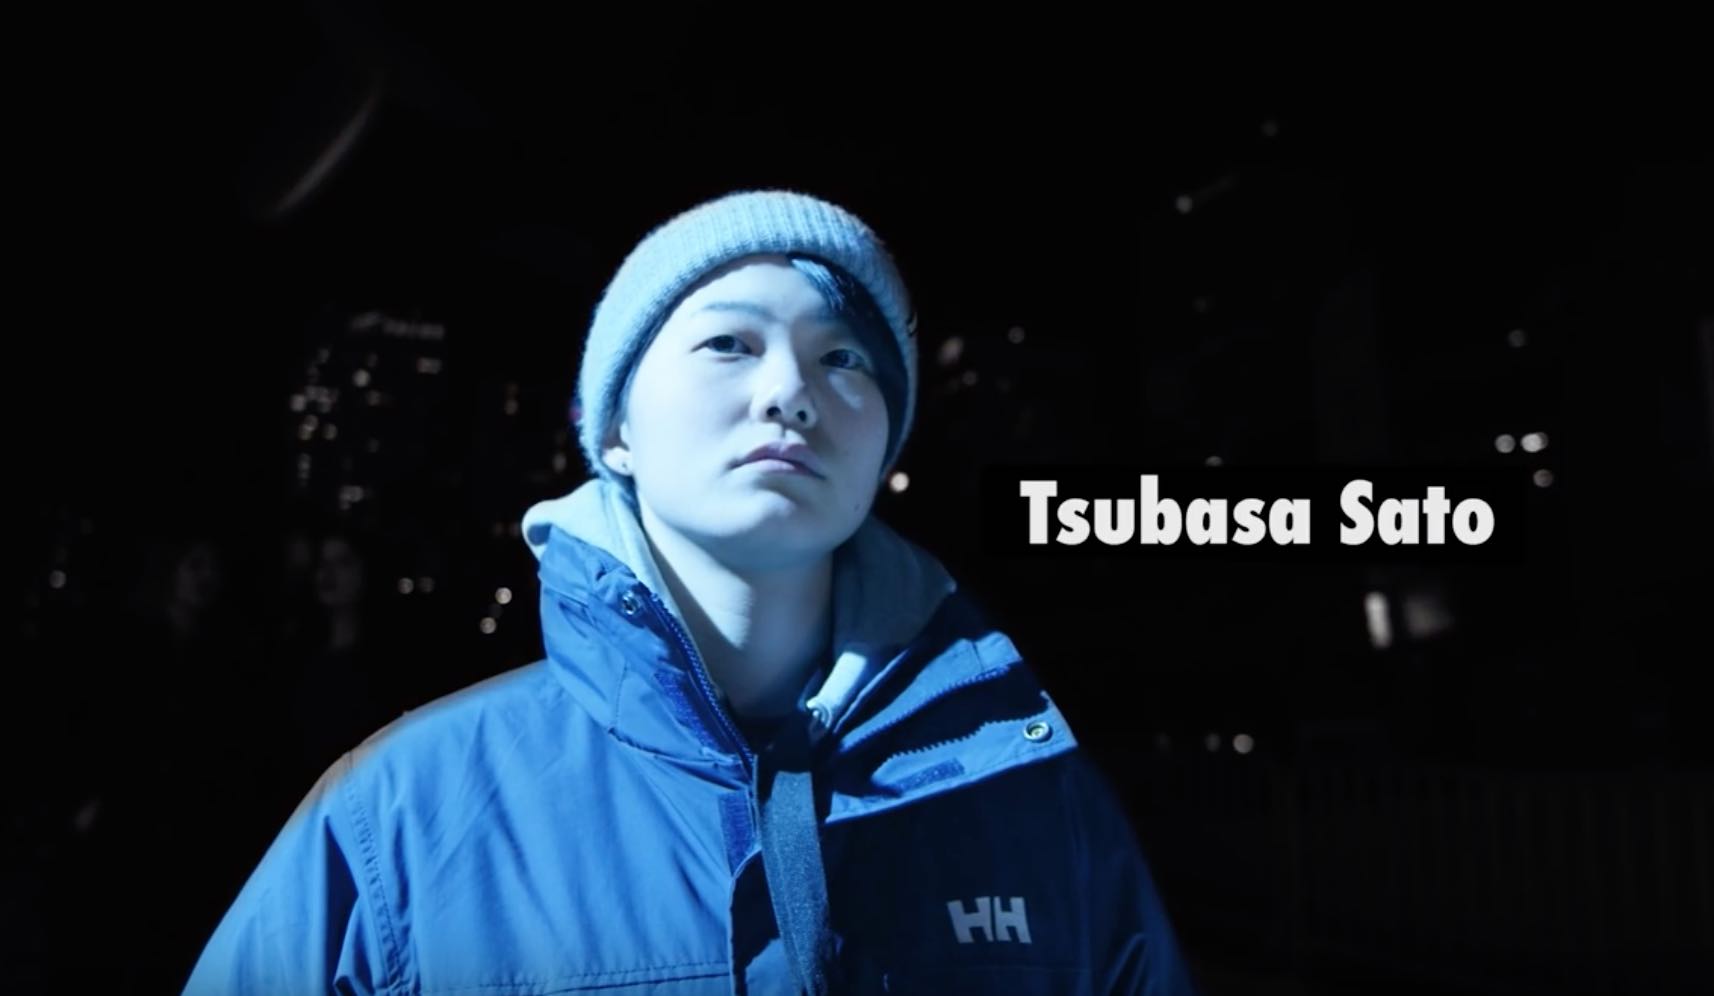 Tsubasa-Sato-Redbull